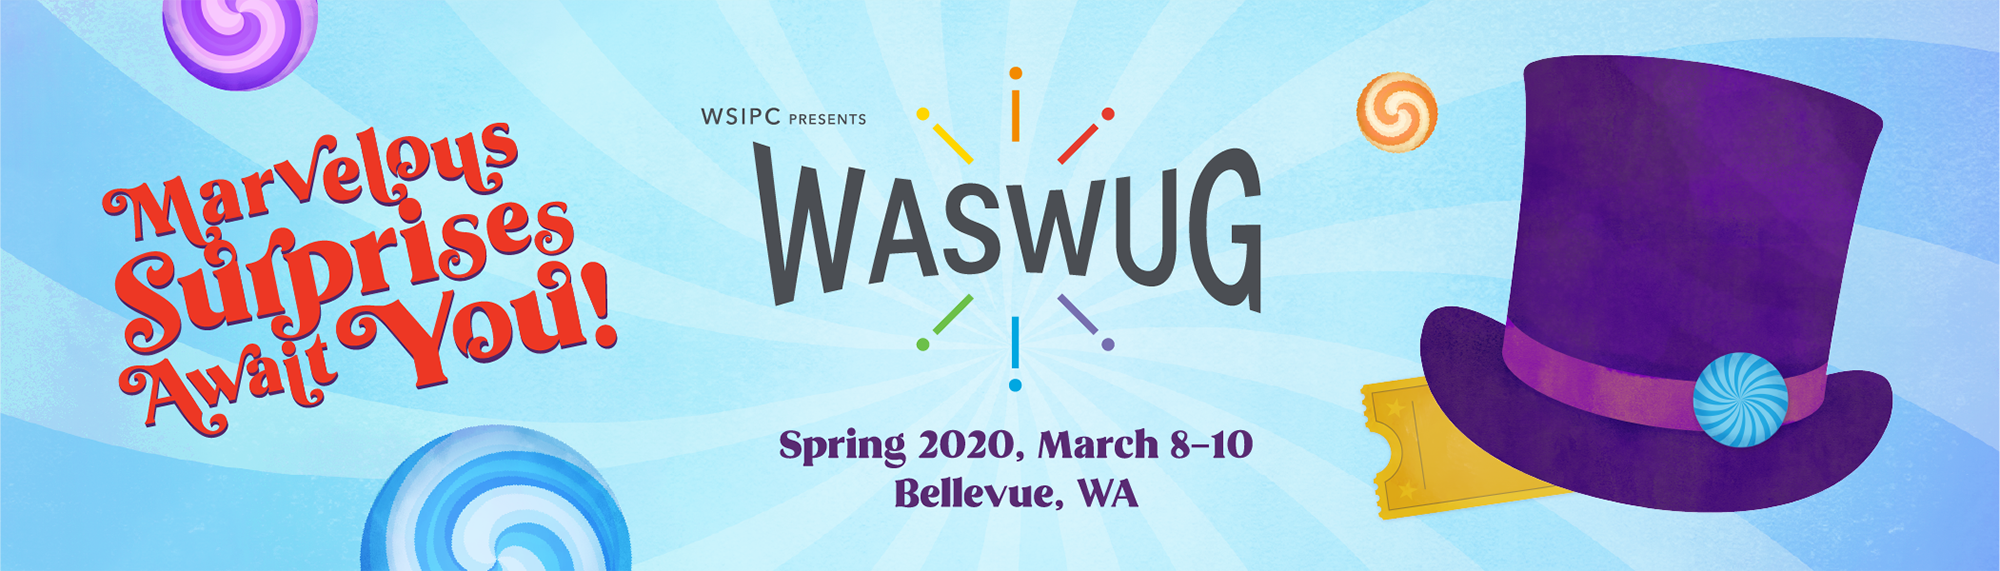 WASWUG Spring 2020 Flyer